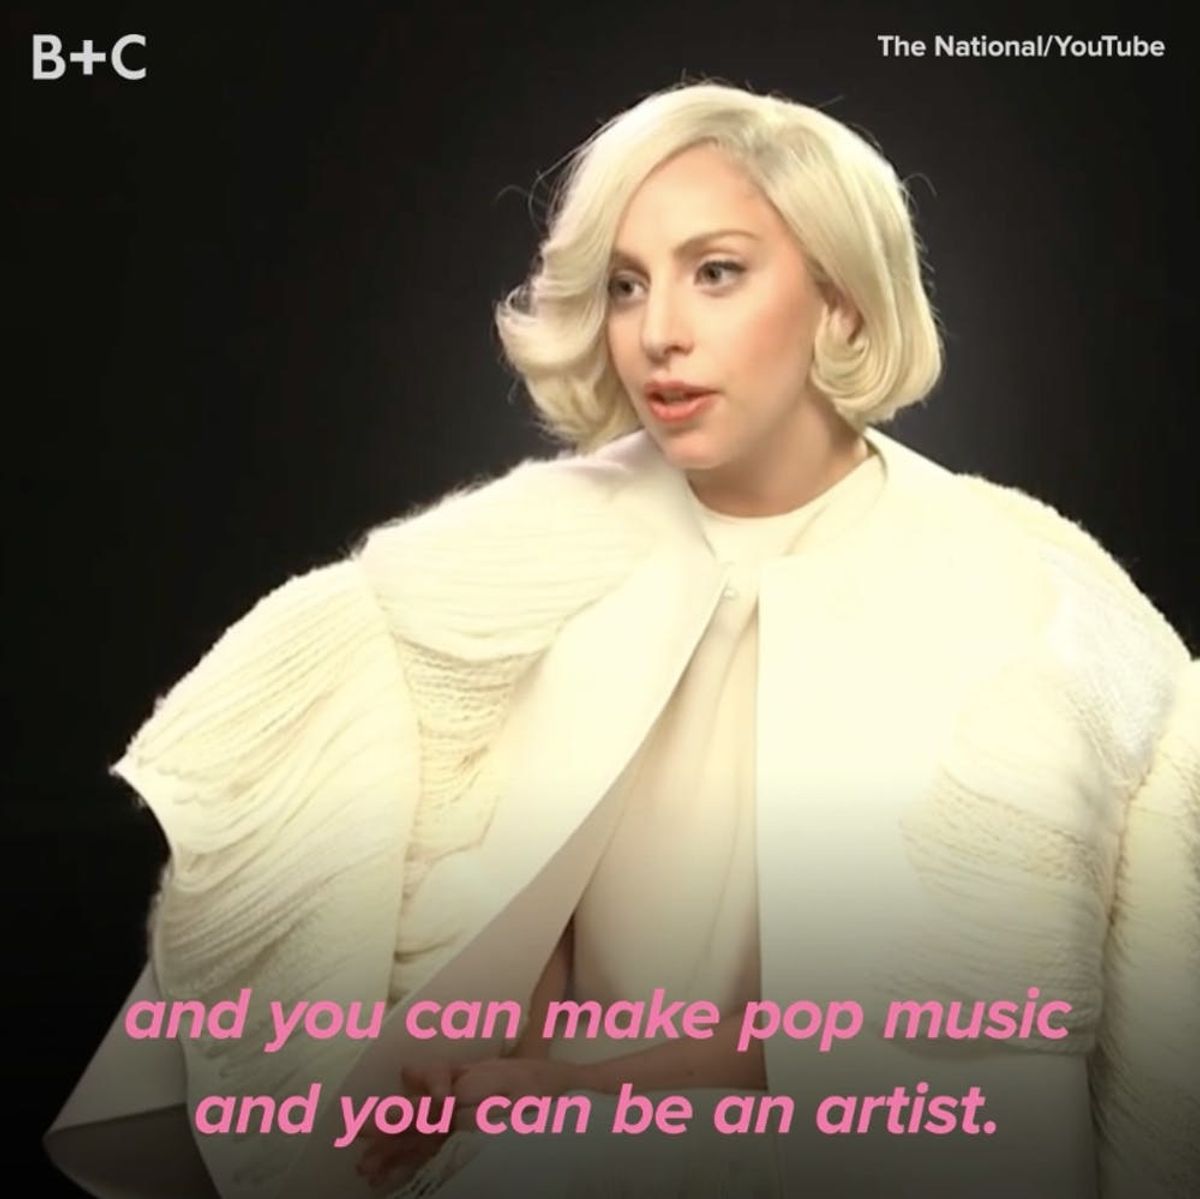 Proof That Lady Gaga Is Full of Life Wisdom